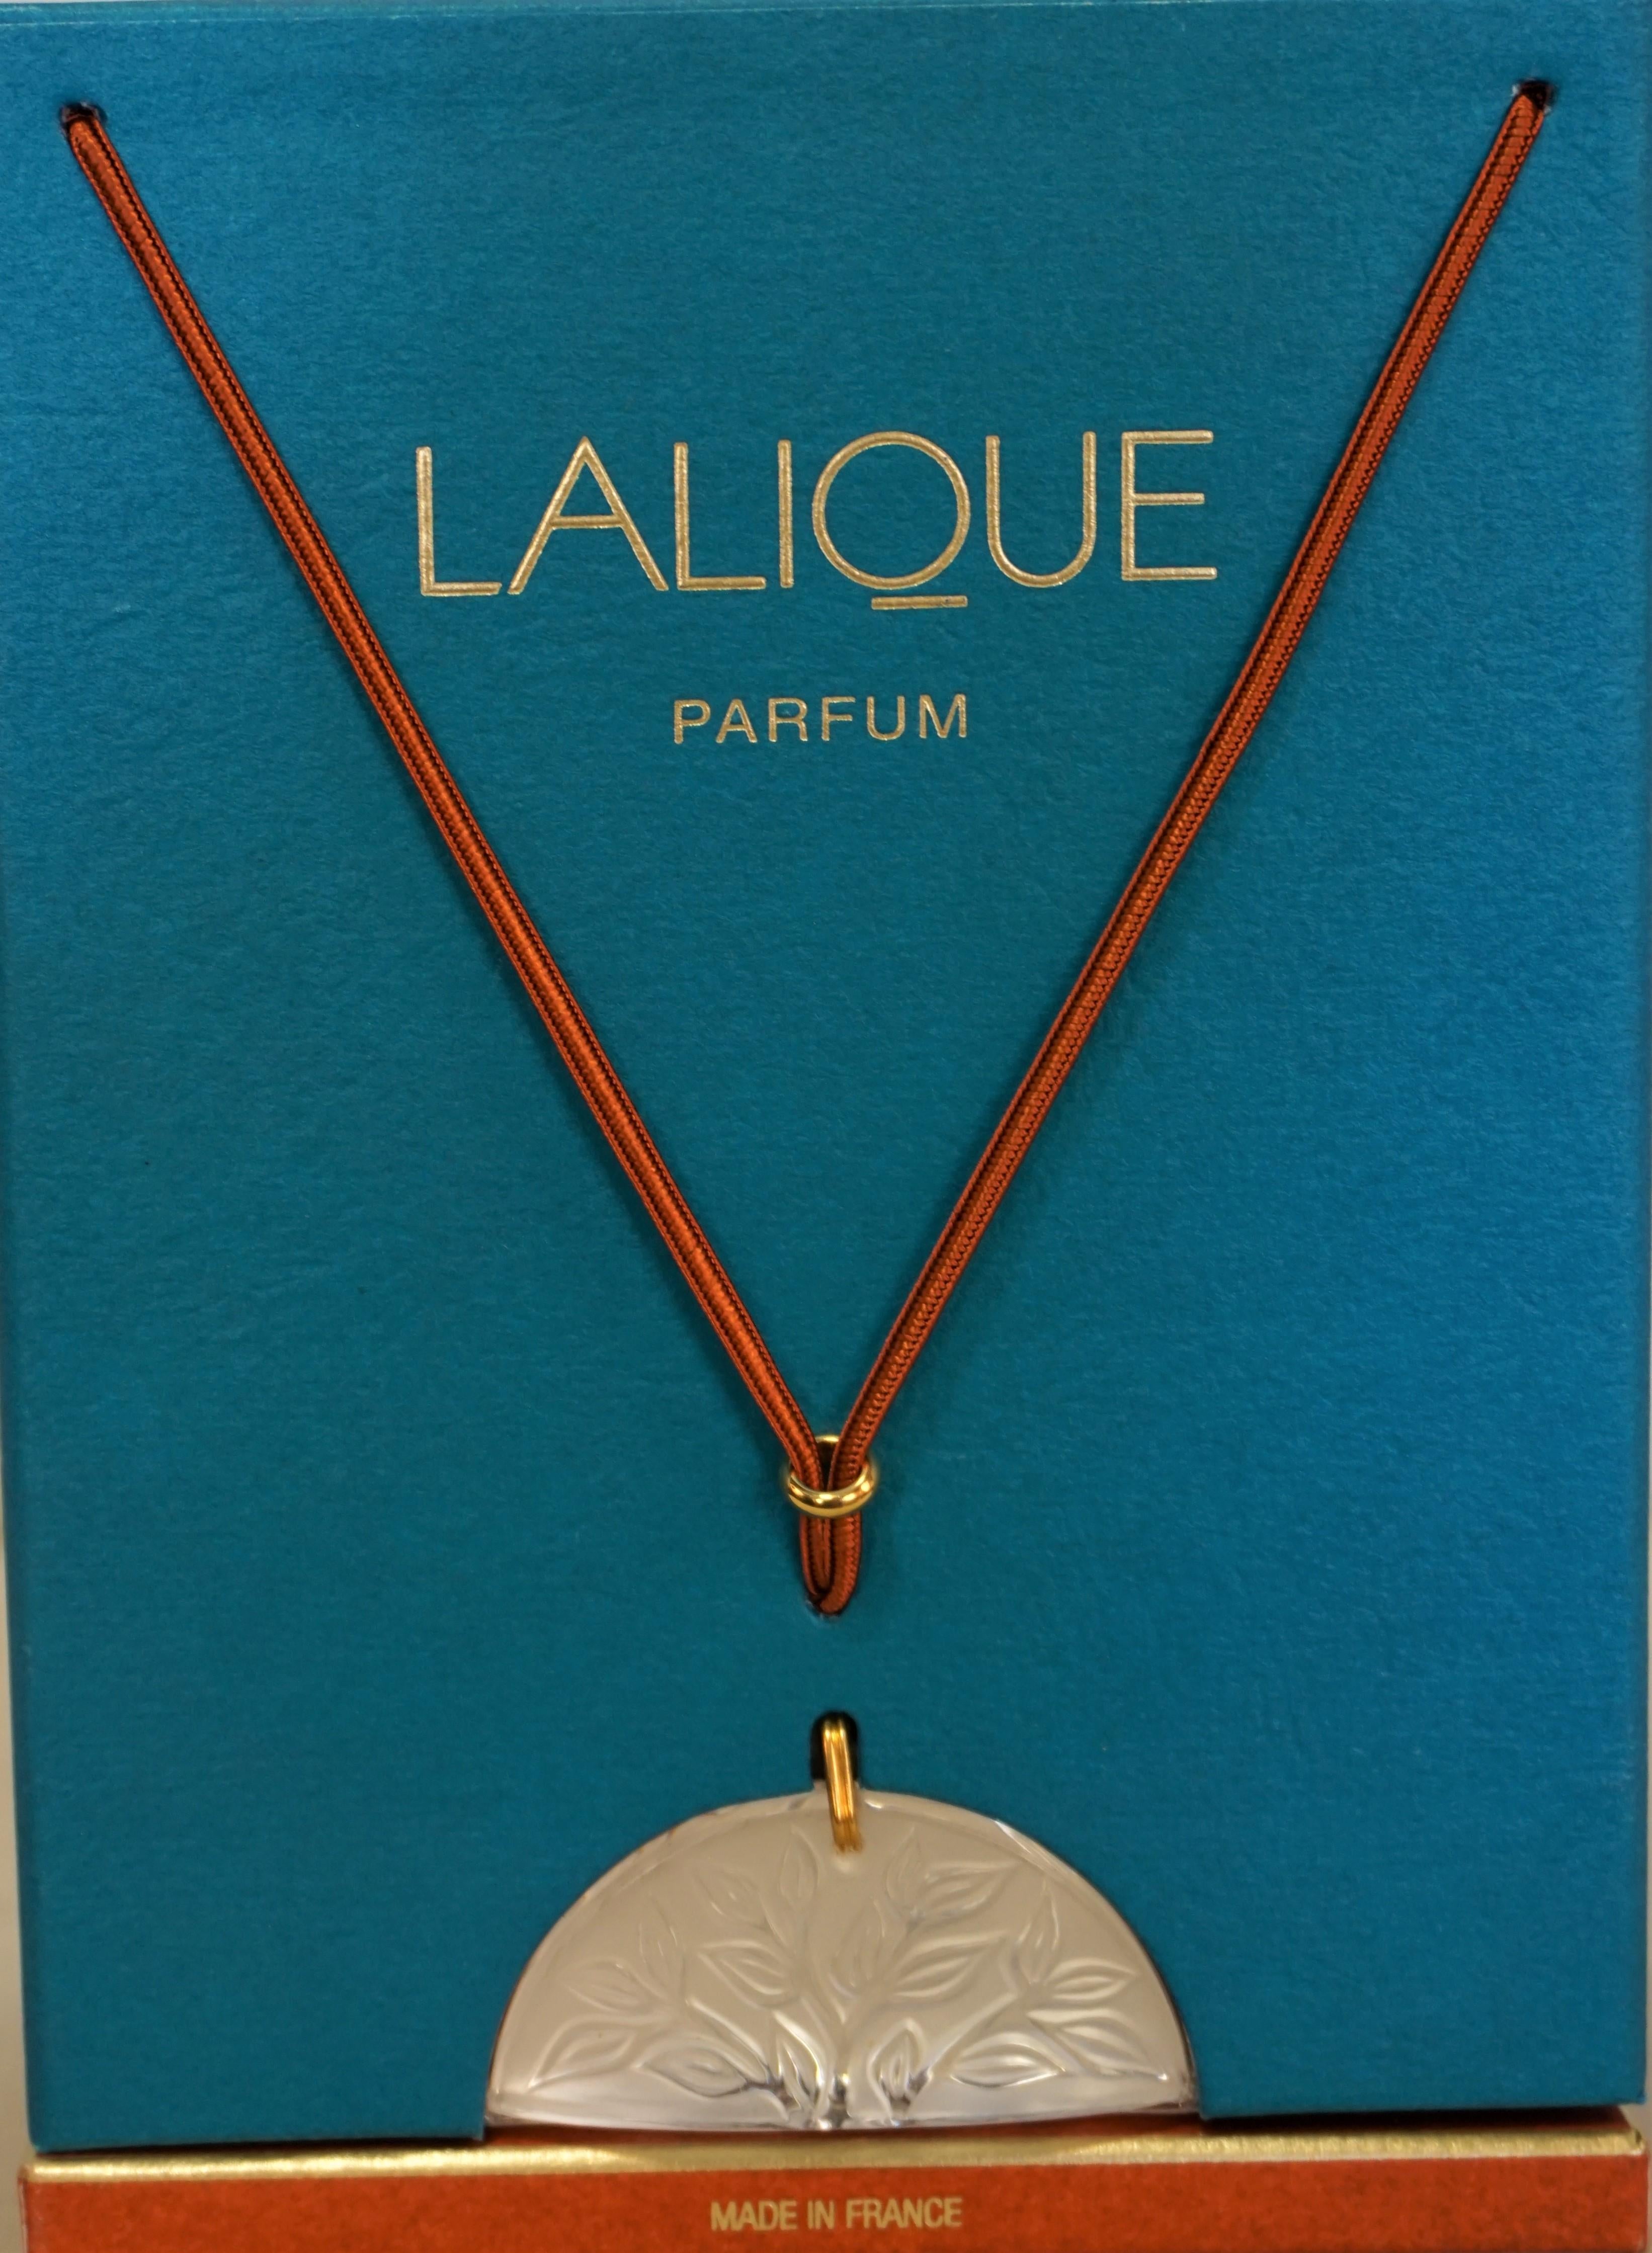 Vintage Lalique unopened perfume bottle with crystal pendant in original presentation box measuring.